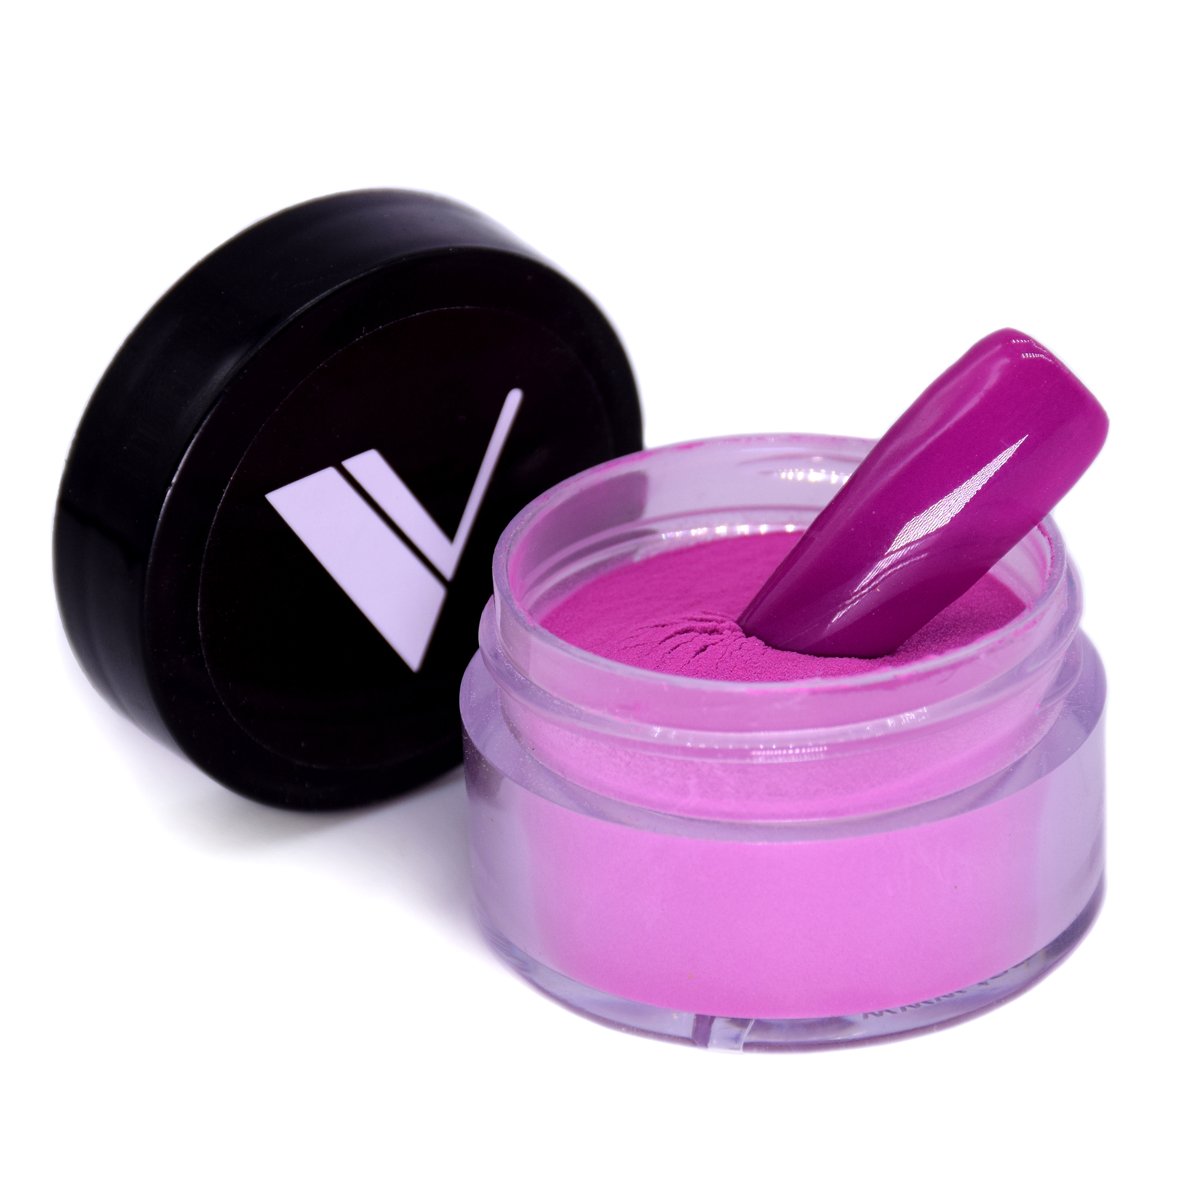 Acrylic Powder - Acrylic System by Valentino Beauty Pure - 170 Biscayne